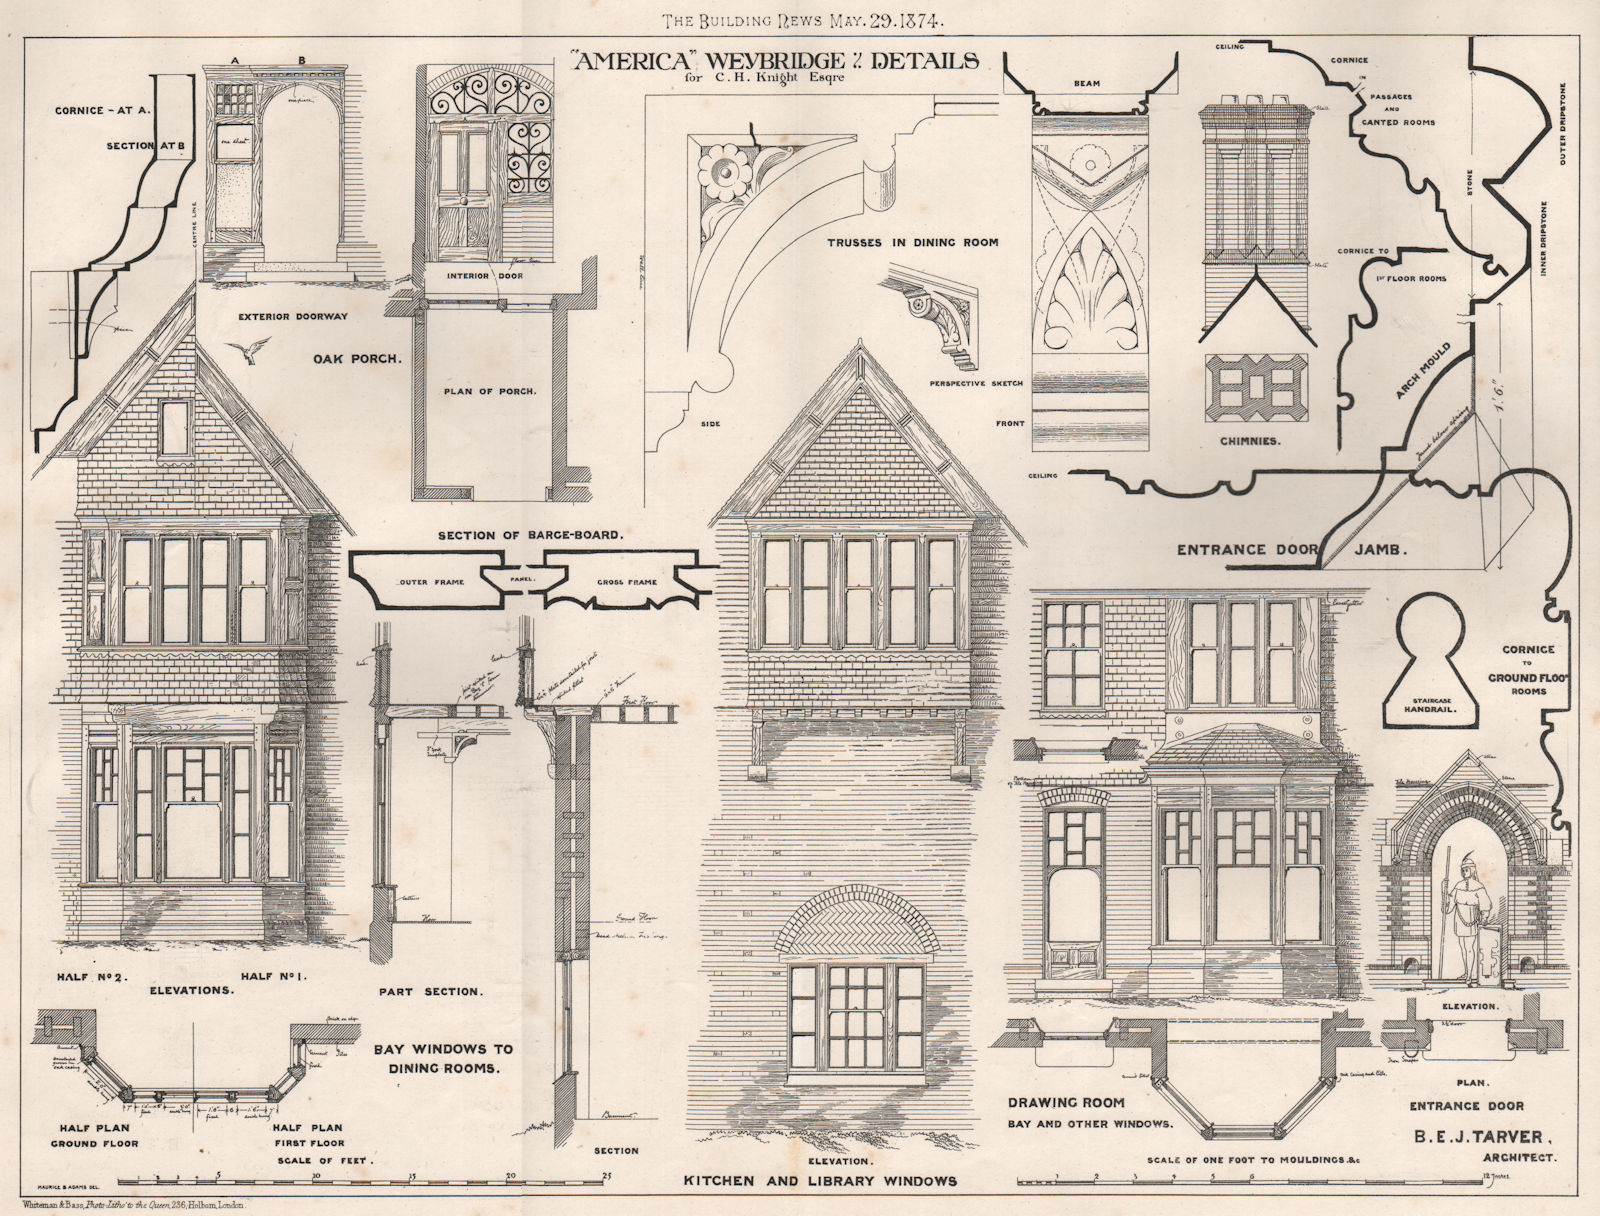 "America", Weybridge; details for C.H. Knight; B.E.J. Tarver Archt. Surrey 1874